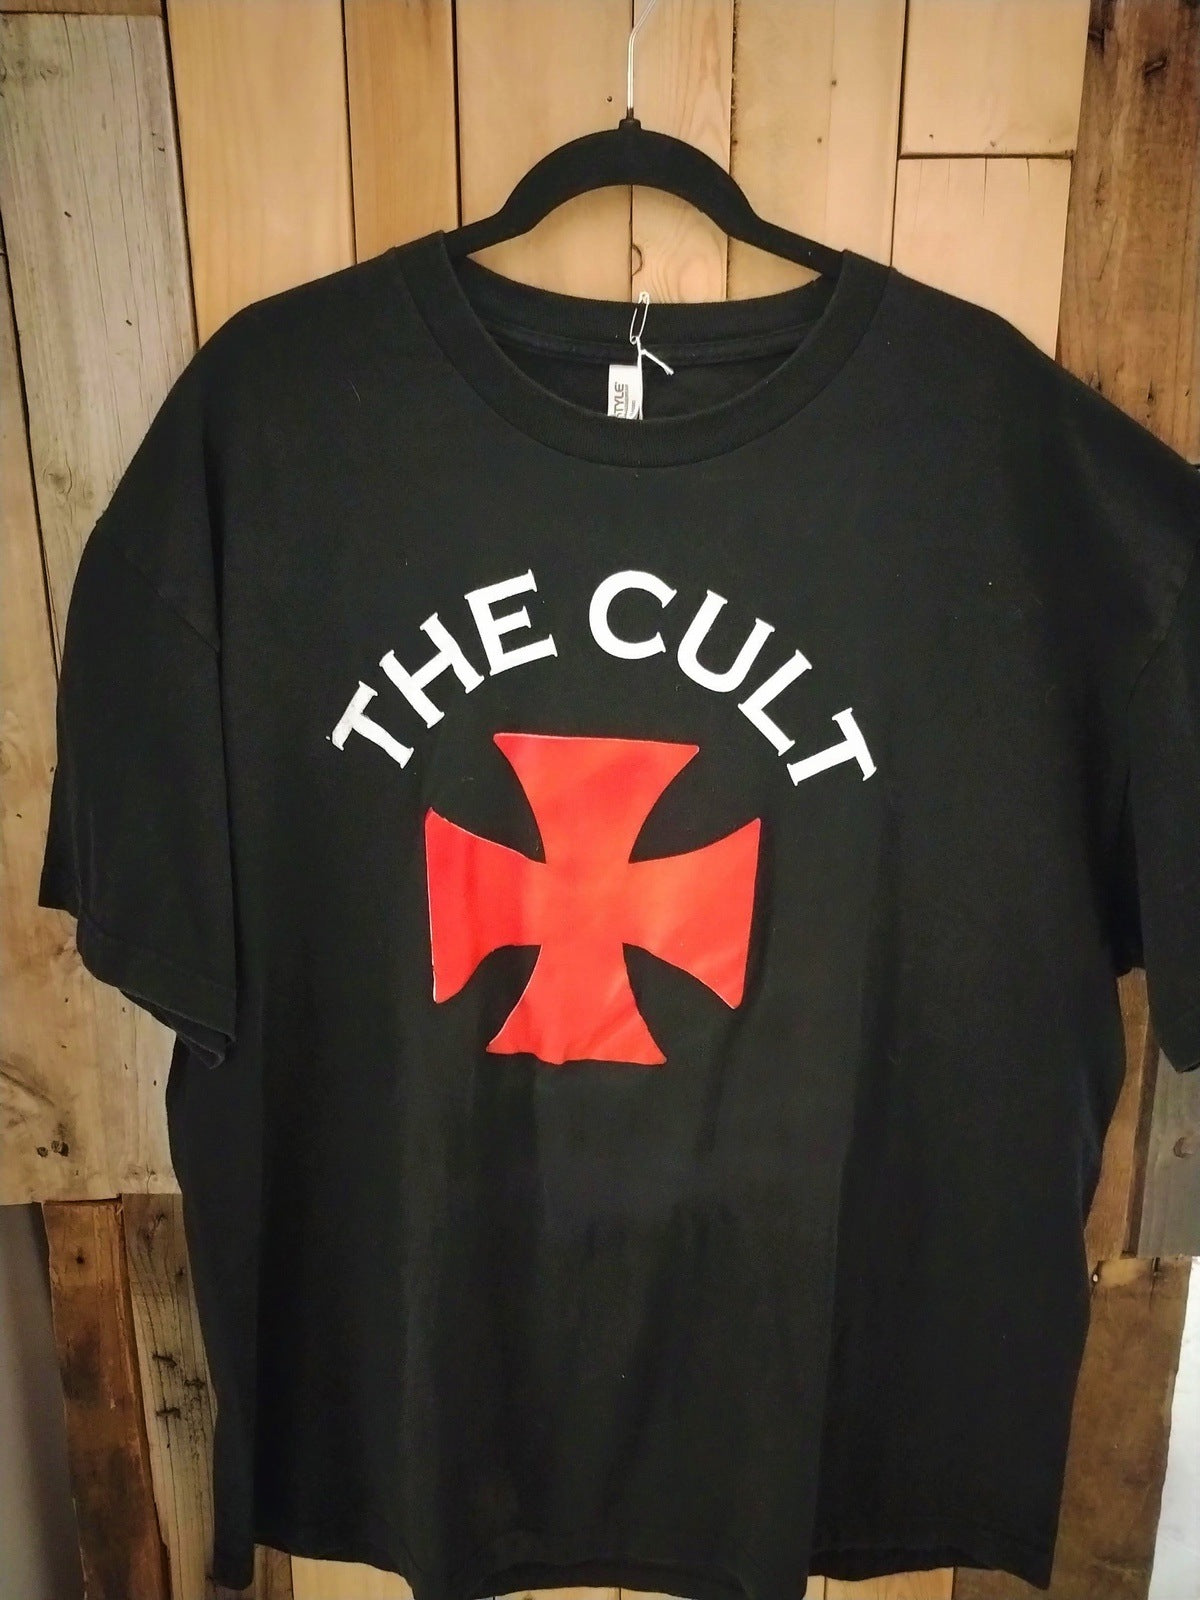 The Cult Greek Theater Show Tee Shirt Size 2XL